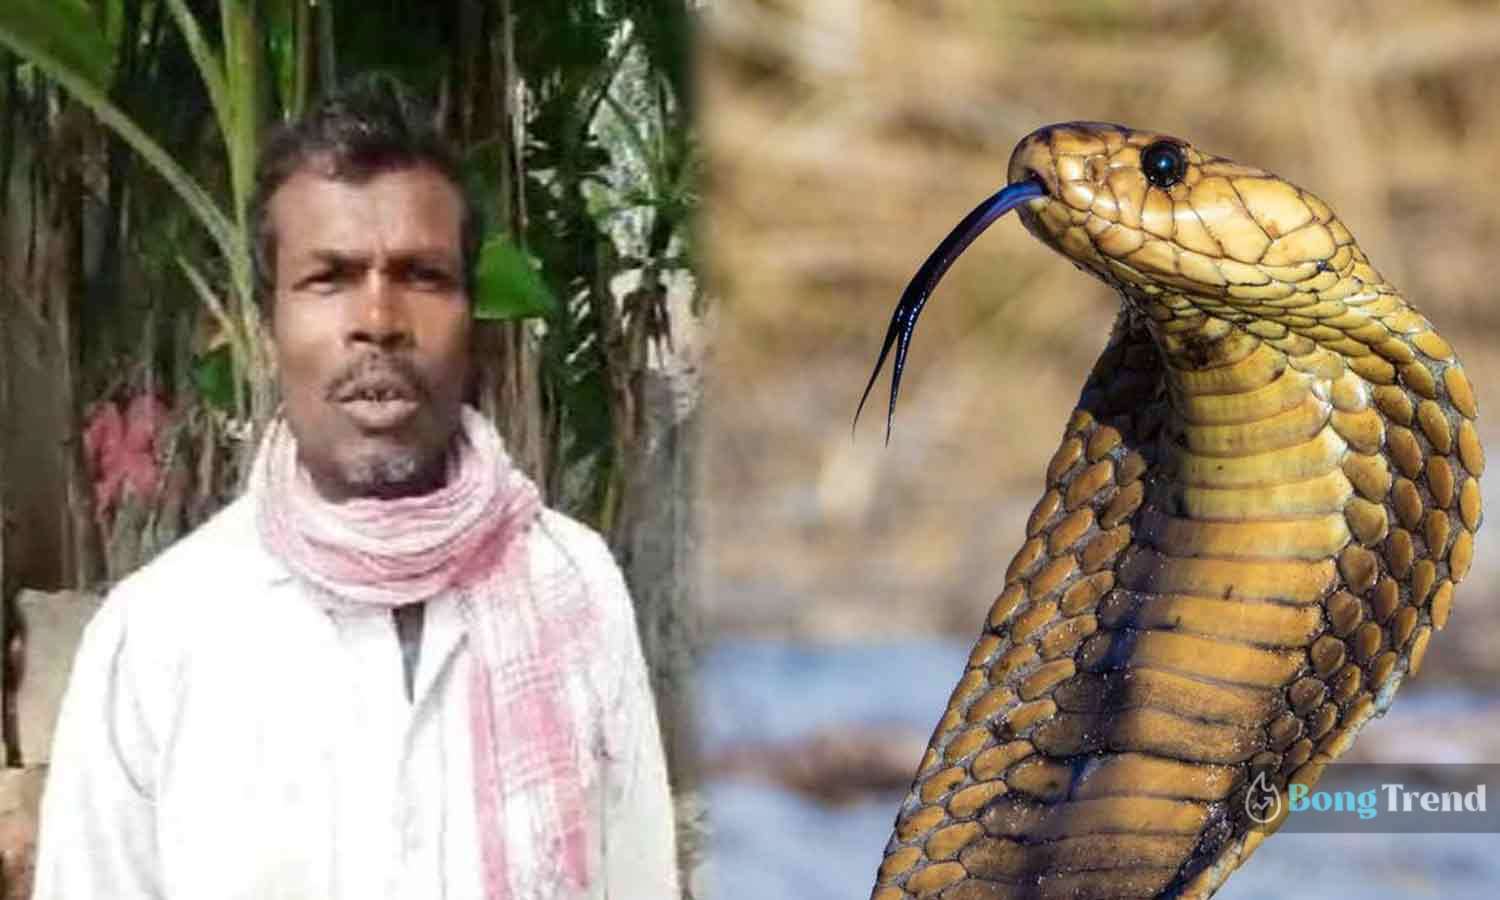 Cobra bites a man 72 times